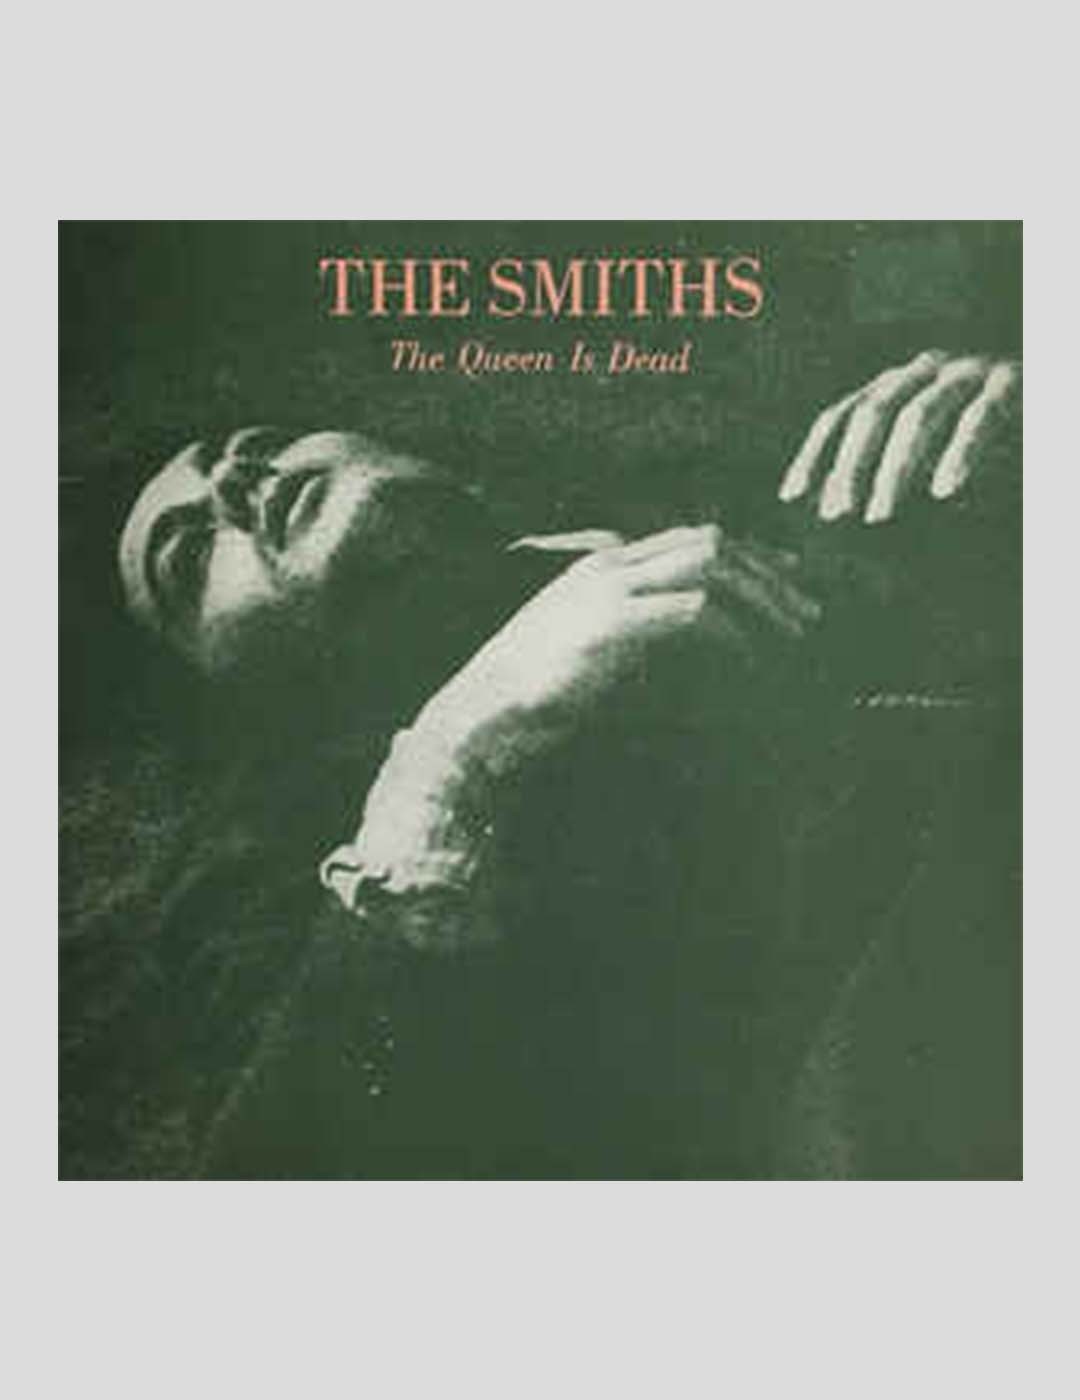 VINILO THE SMITHS - THE QUEEN IS DEAD LP VINYL